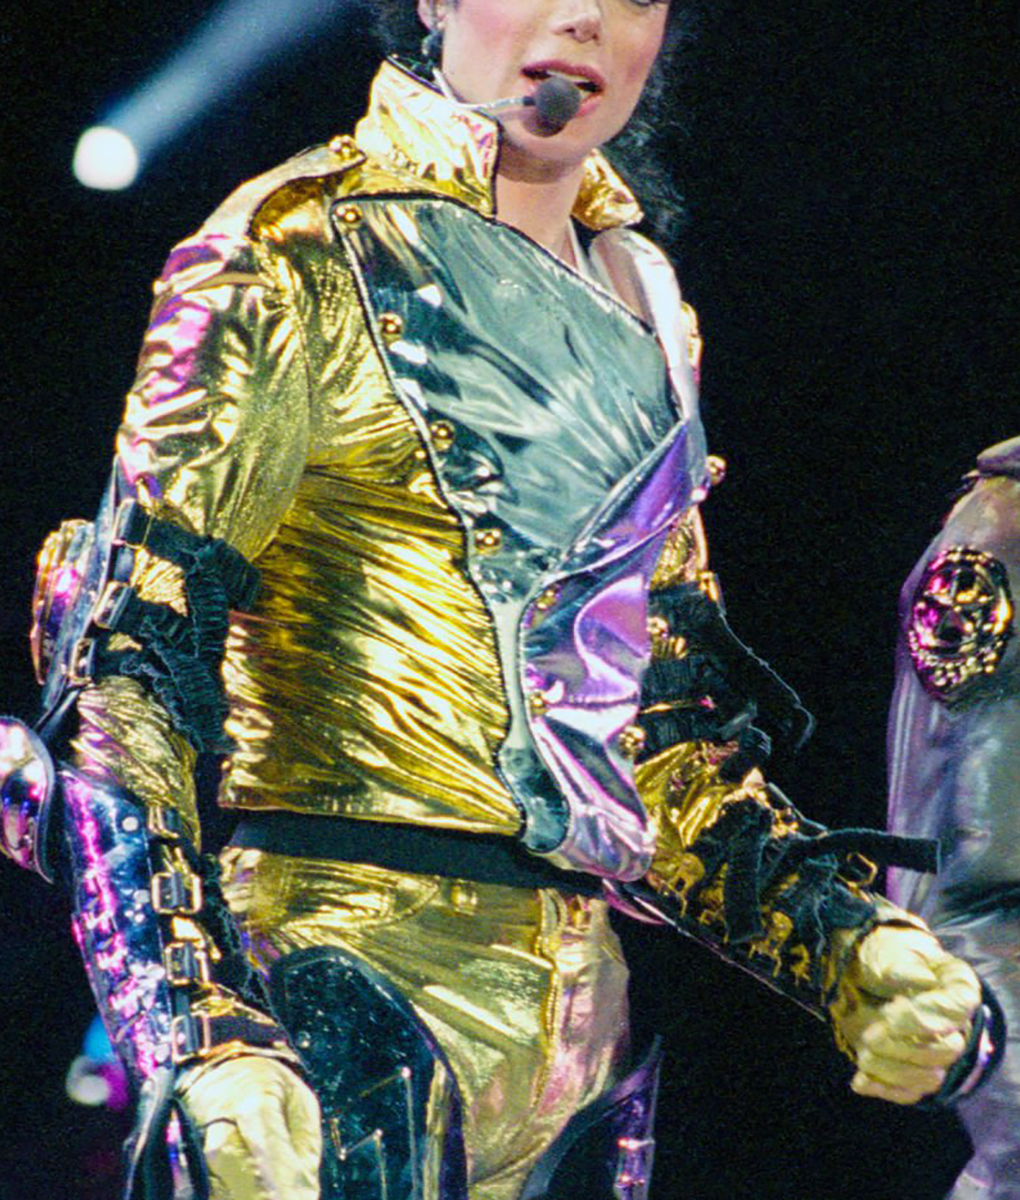 Michael Jackson History World Tour Final Concert Jacket